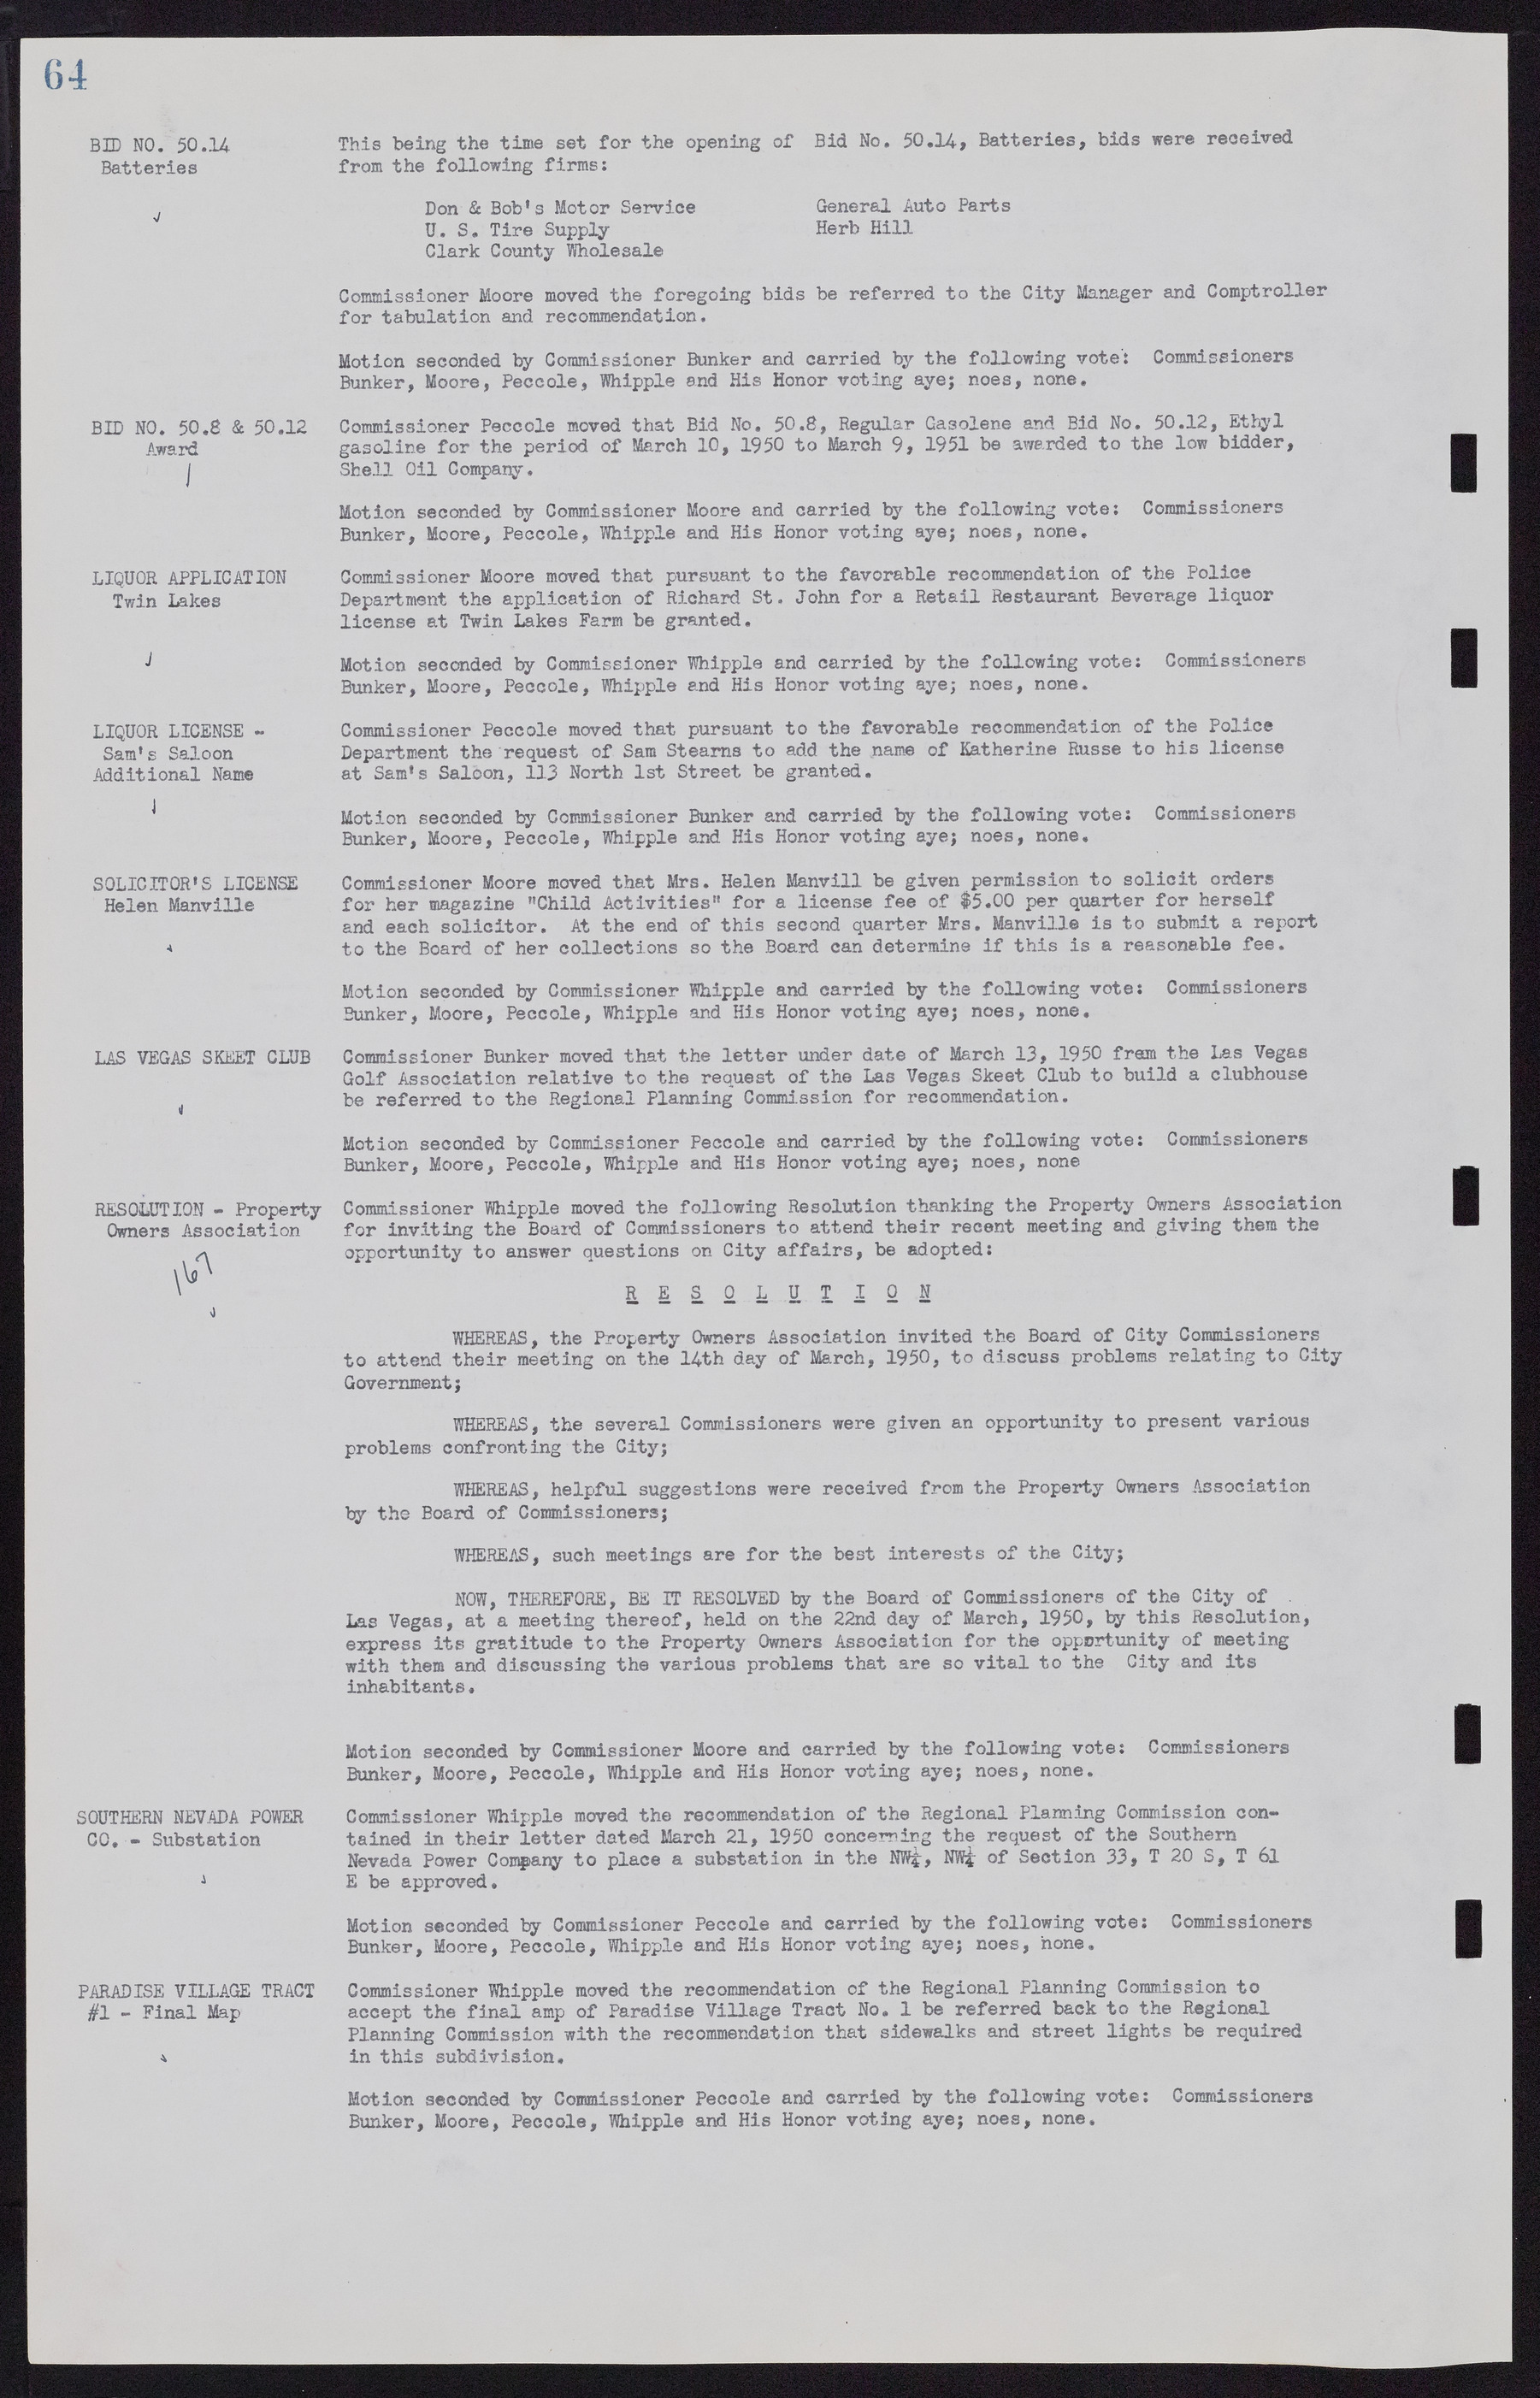 Las Vegas City Commission Minutes, November 7, 1949 to May 21, 1952, lvc000007-72